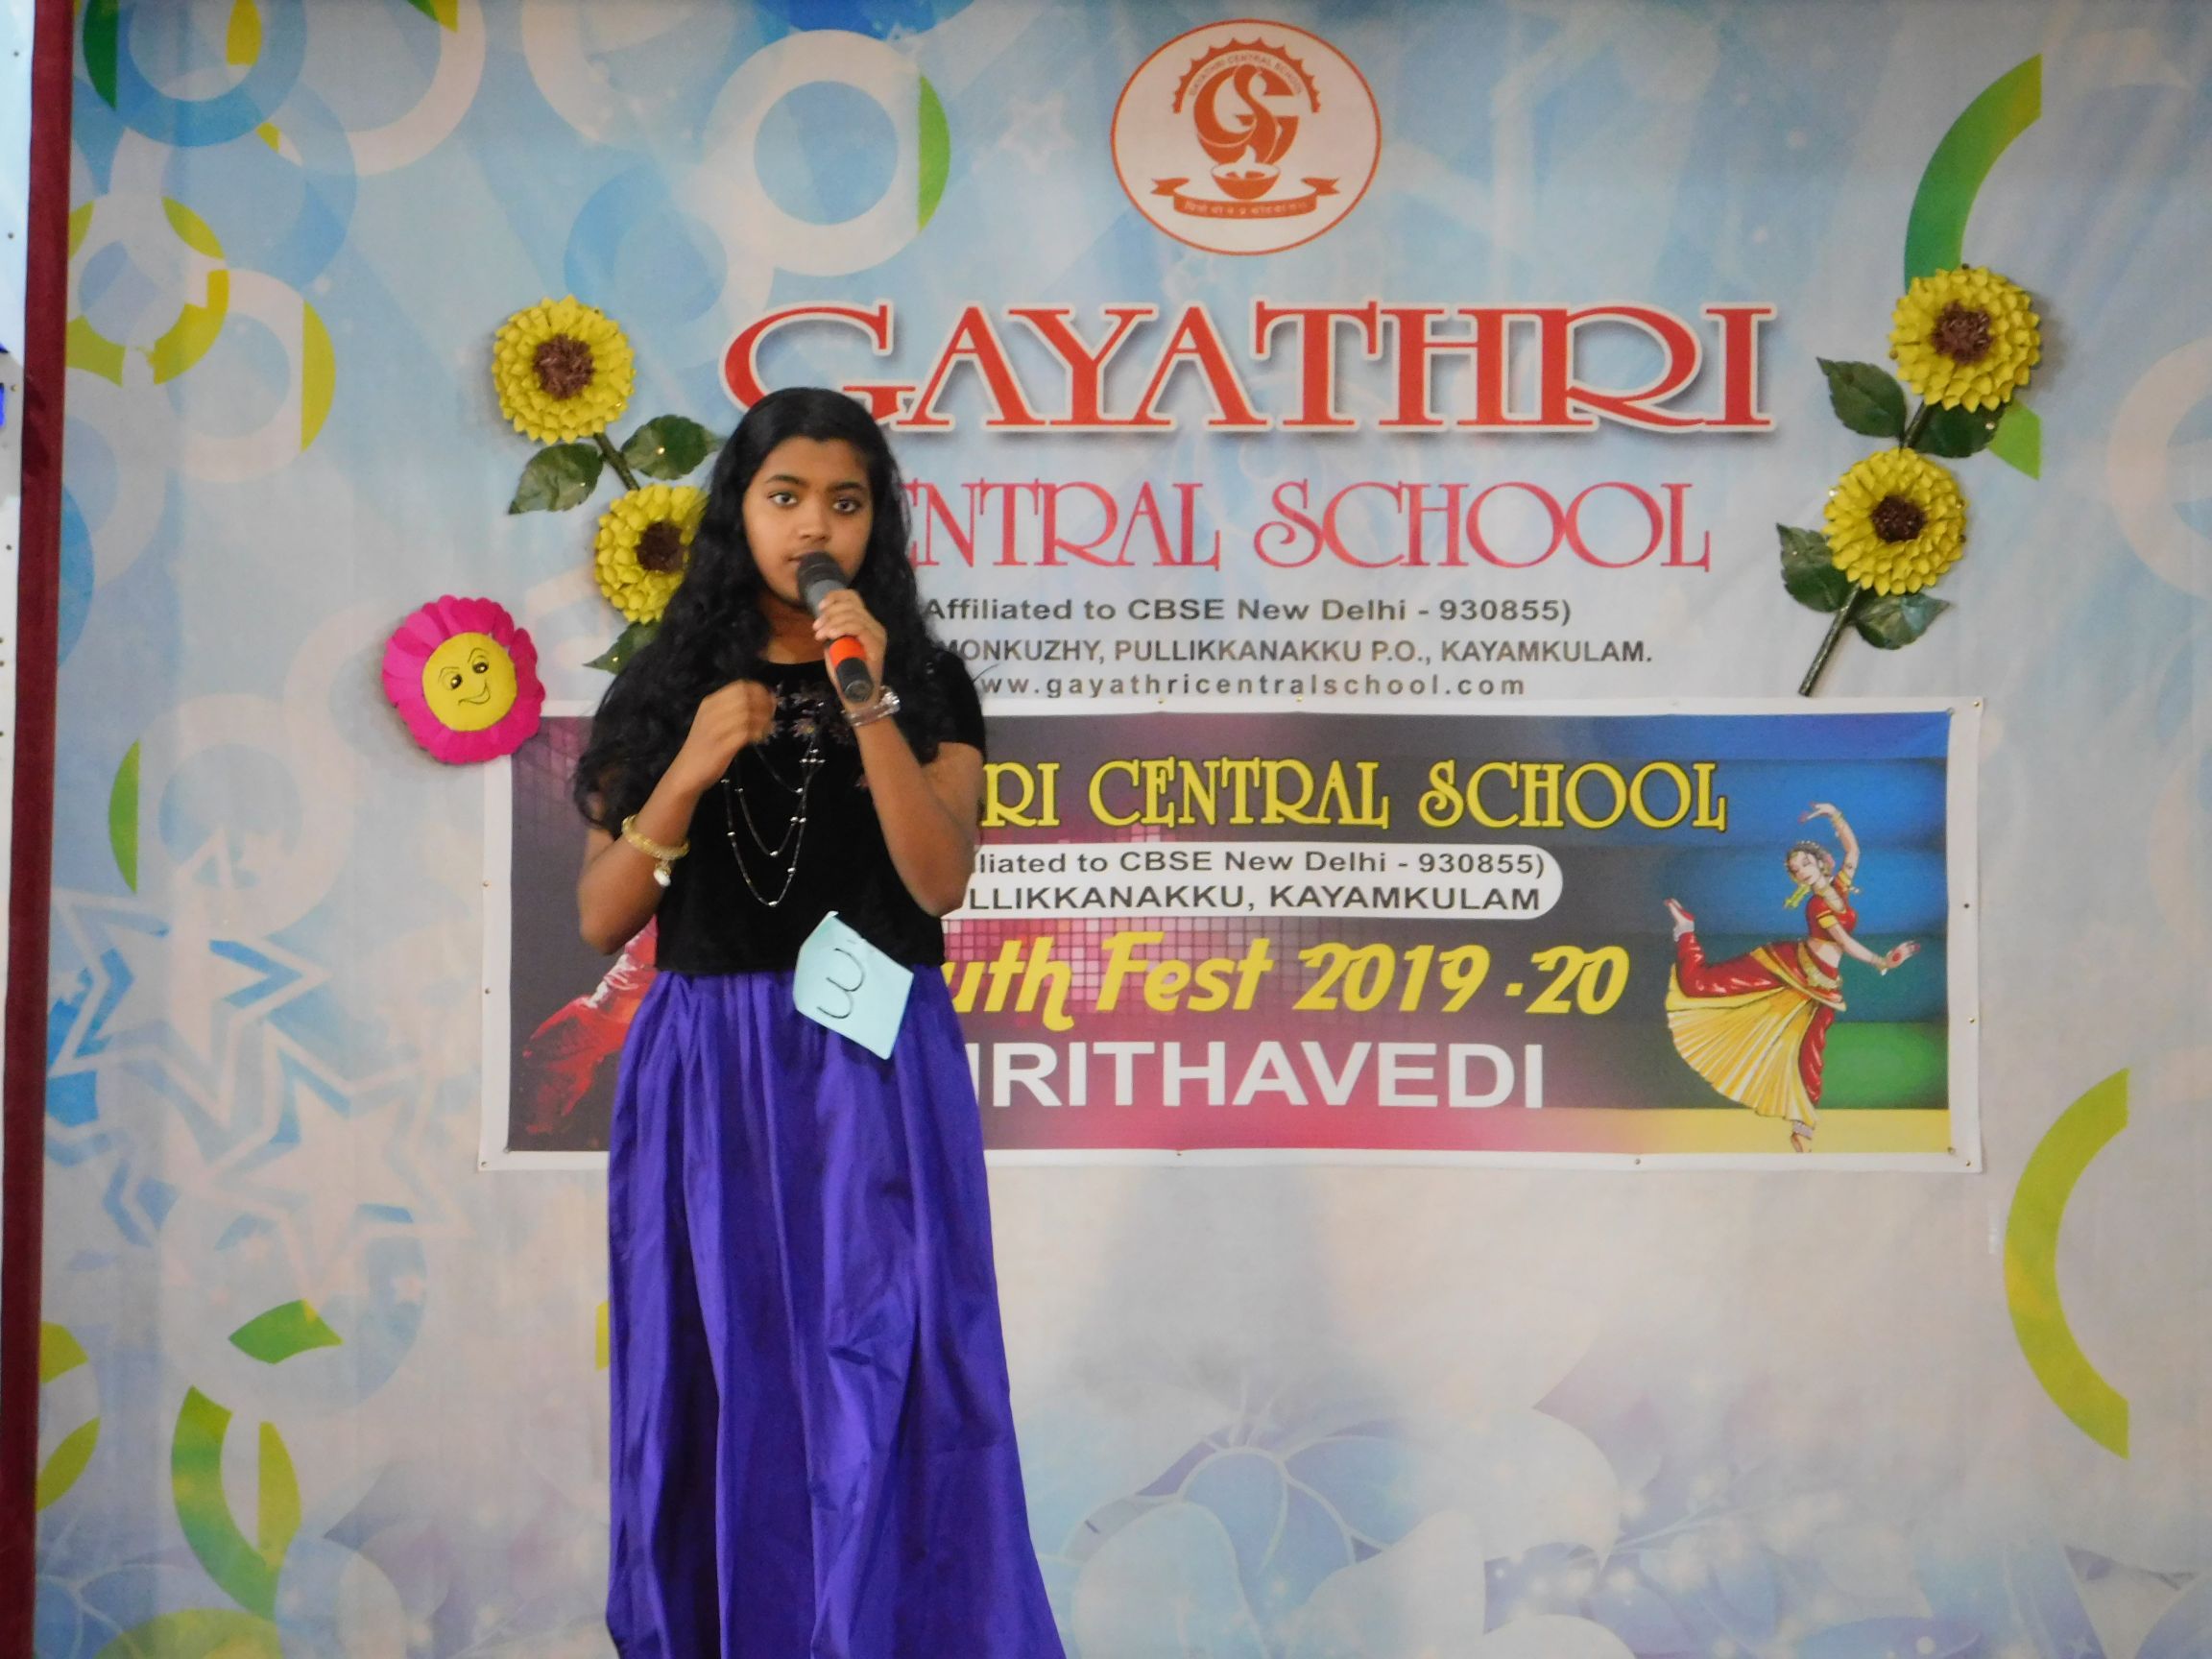 https://www.facebook.com/pg/Gayathri-Central-School-171956266196689/photos/?tab=album&album_id=2380958105296483